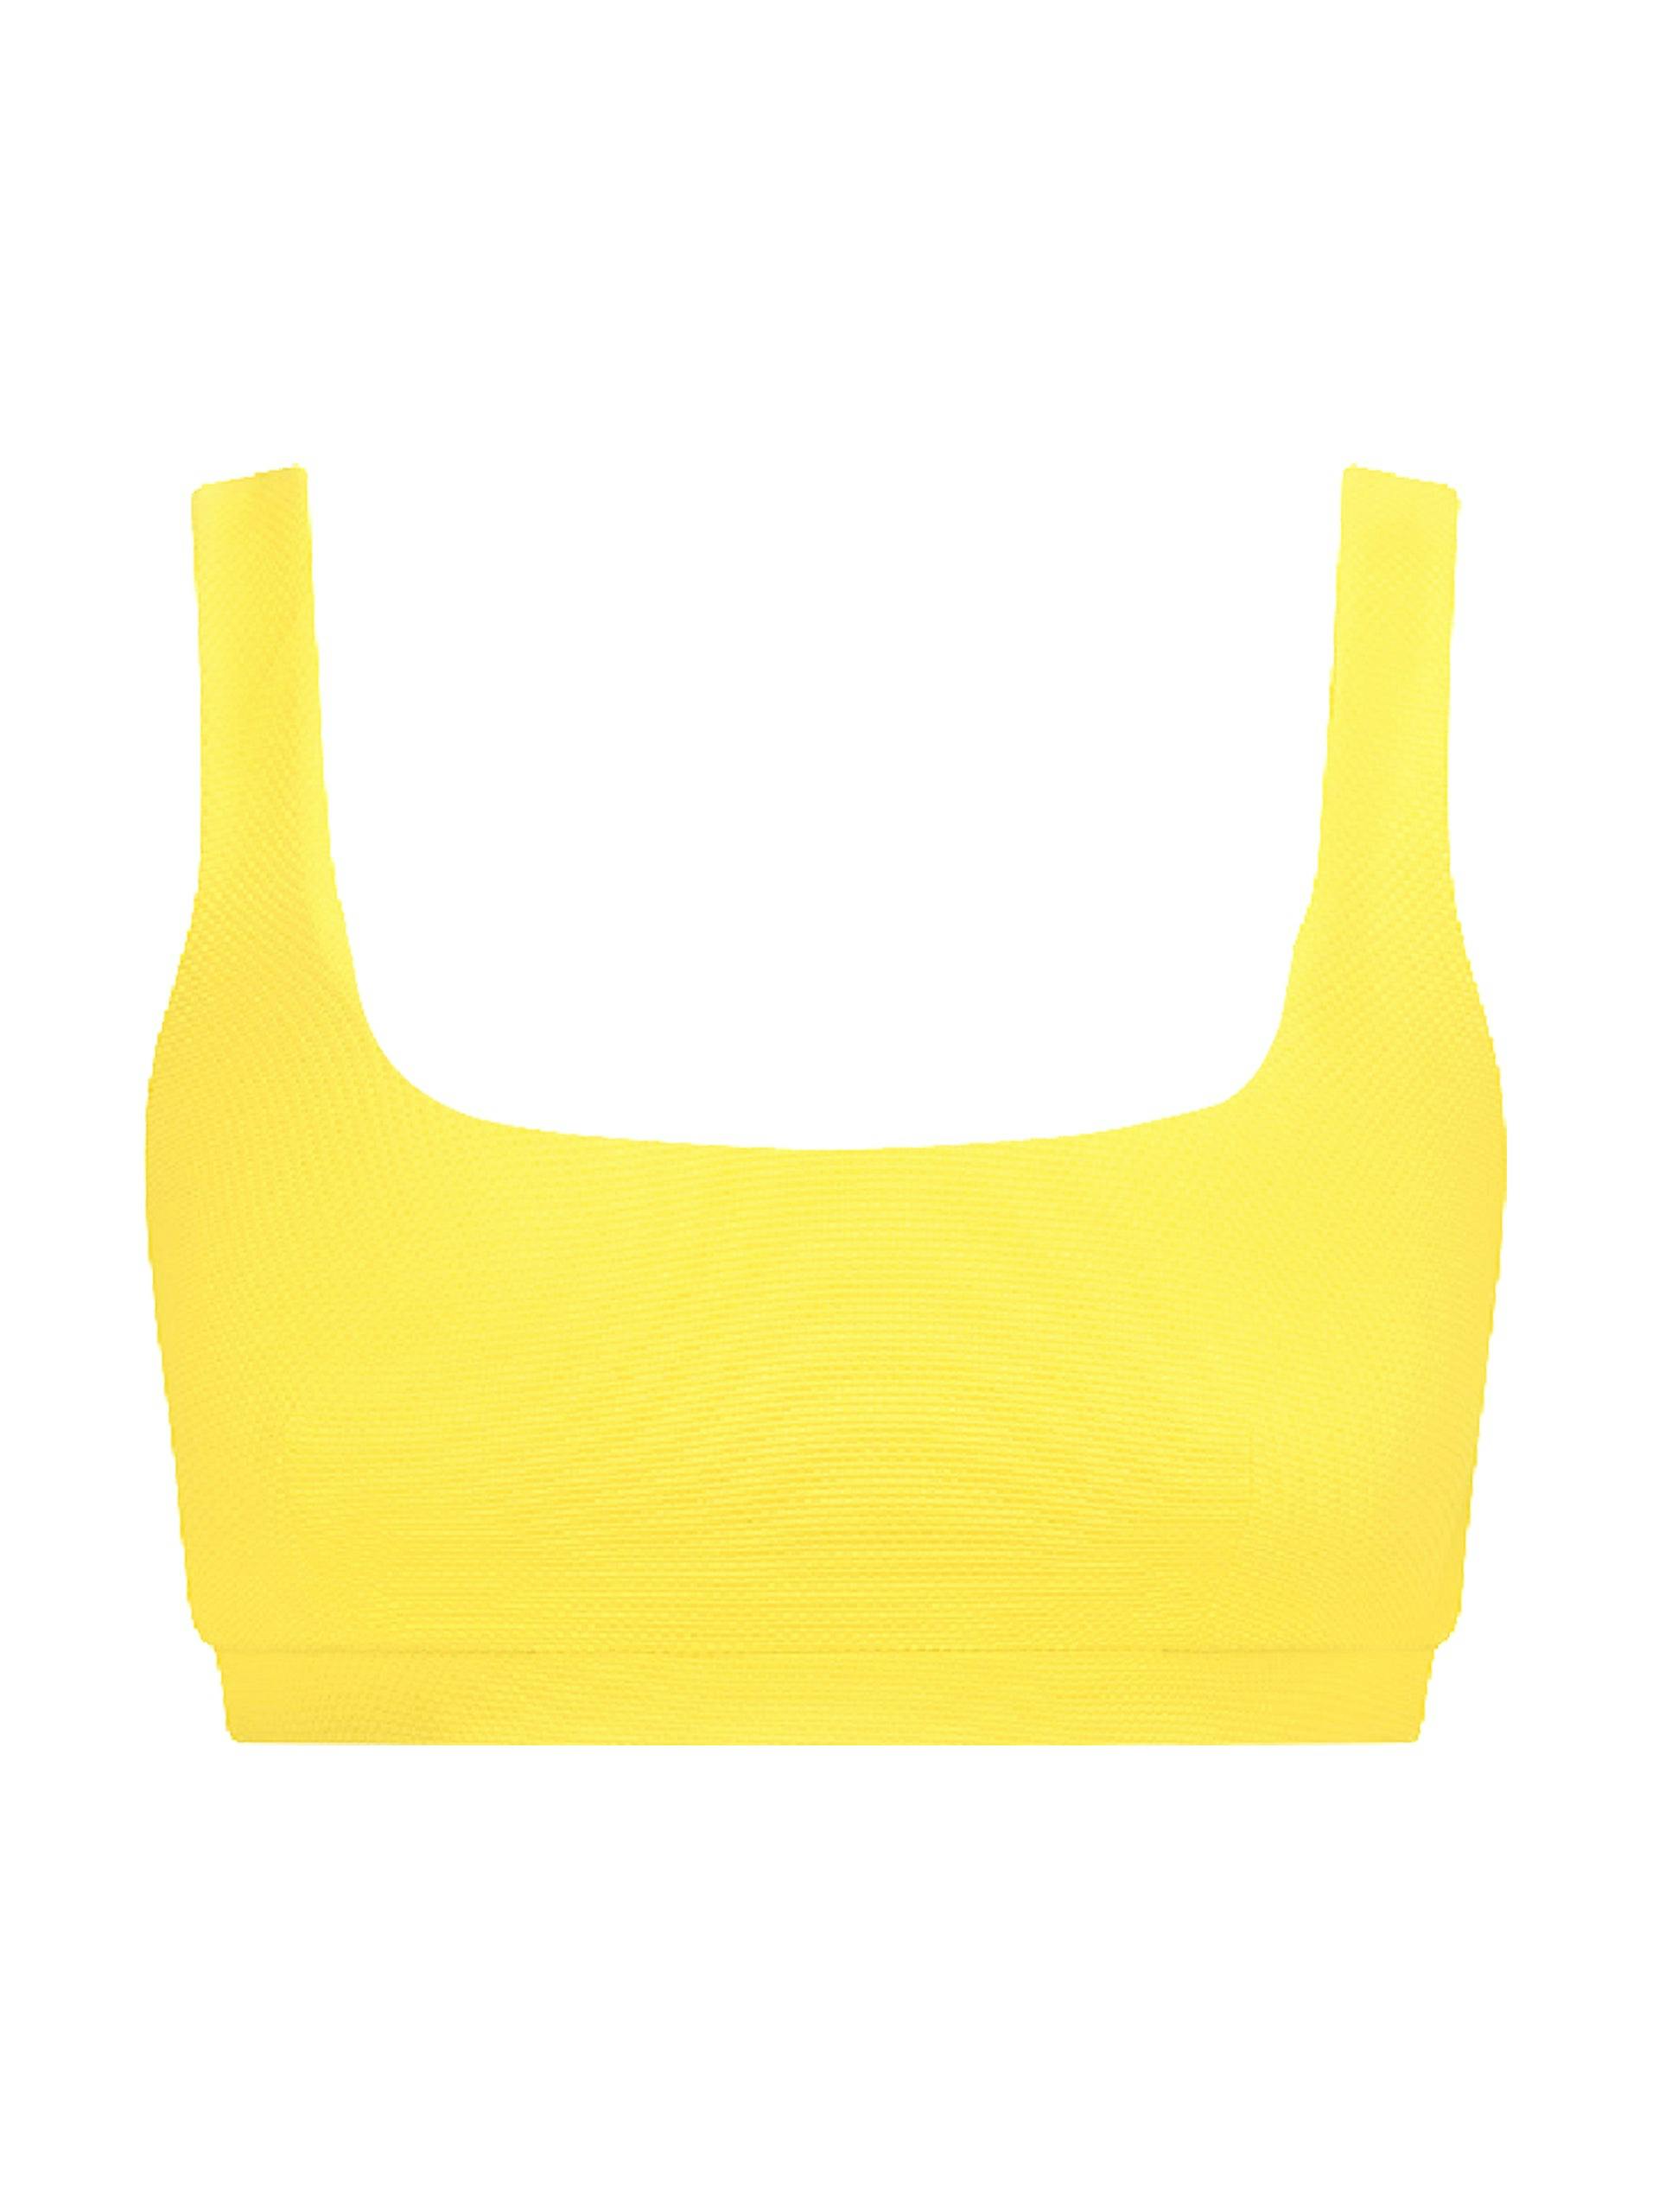 Citron yellow Gemma scooped bikini top